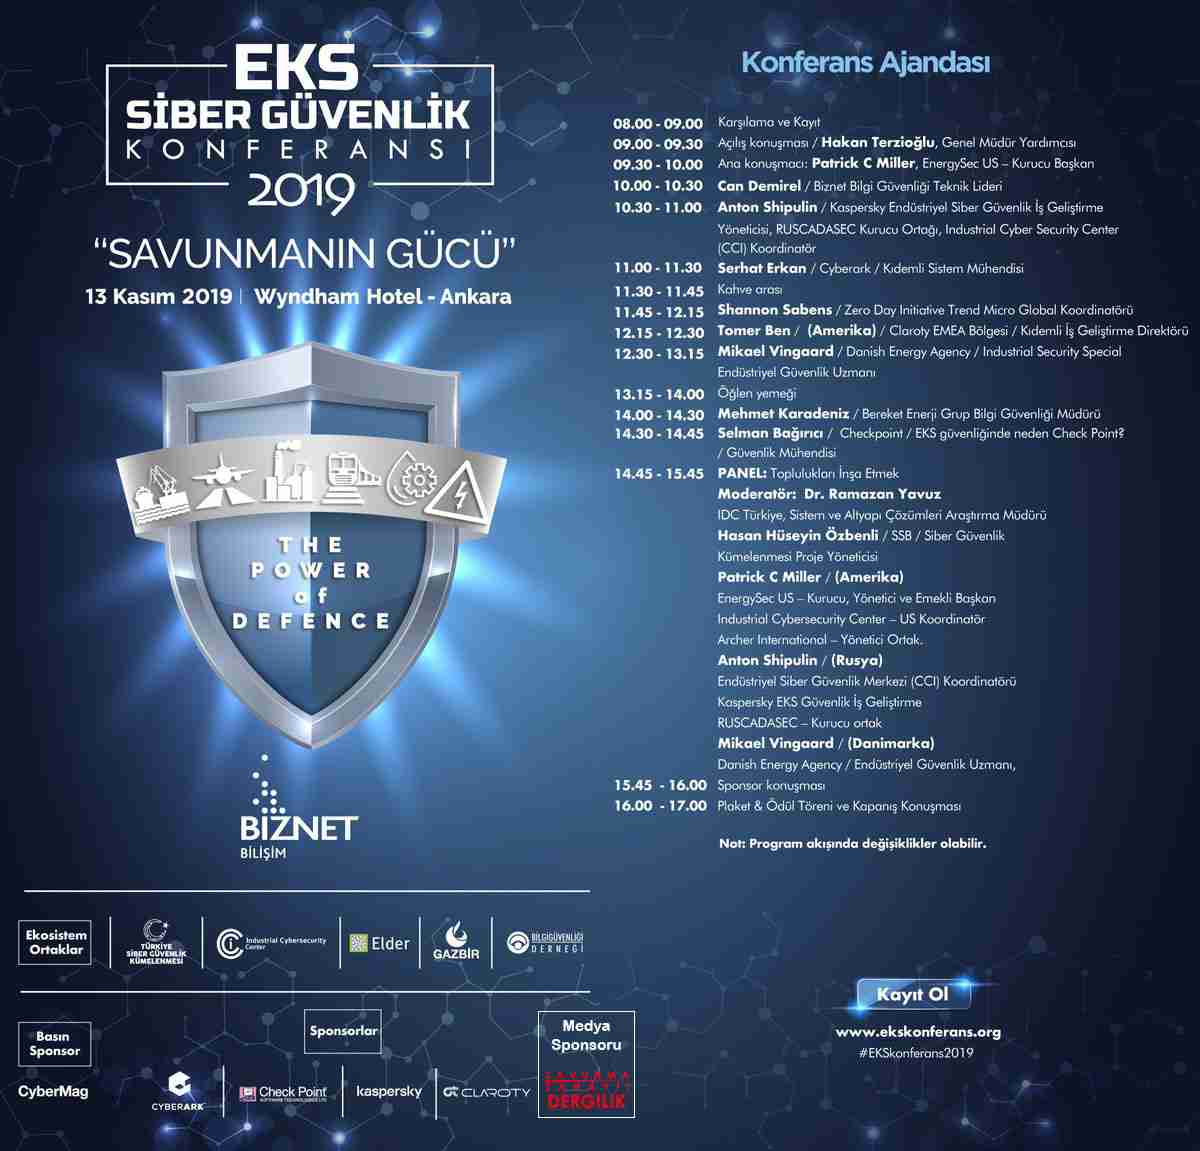 EKS Siber Güvenlik Konferansı 2019